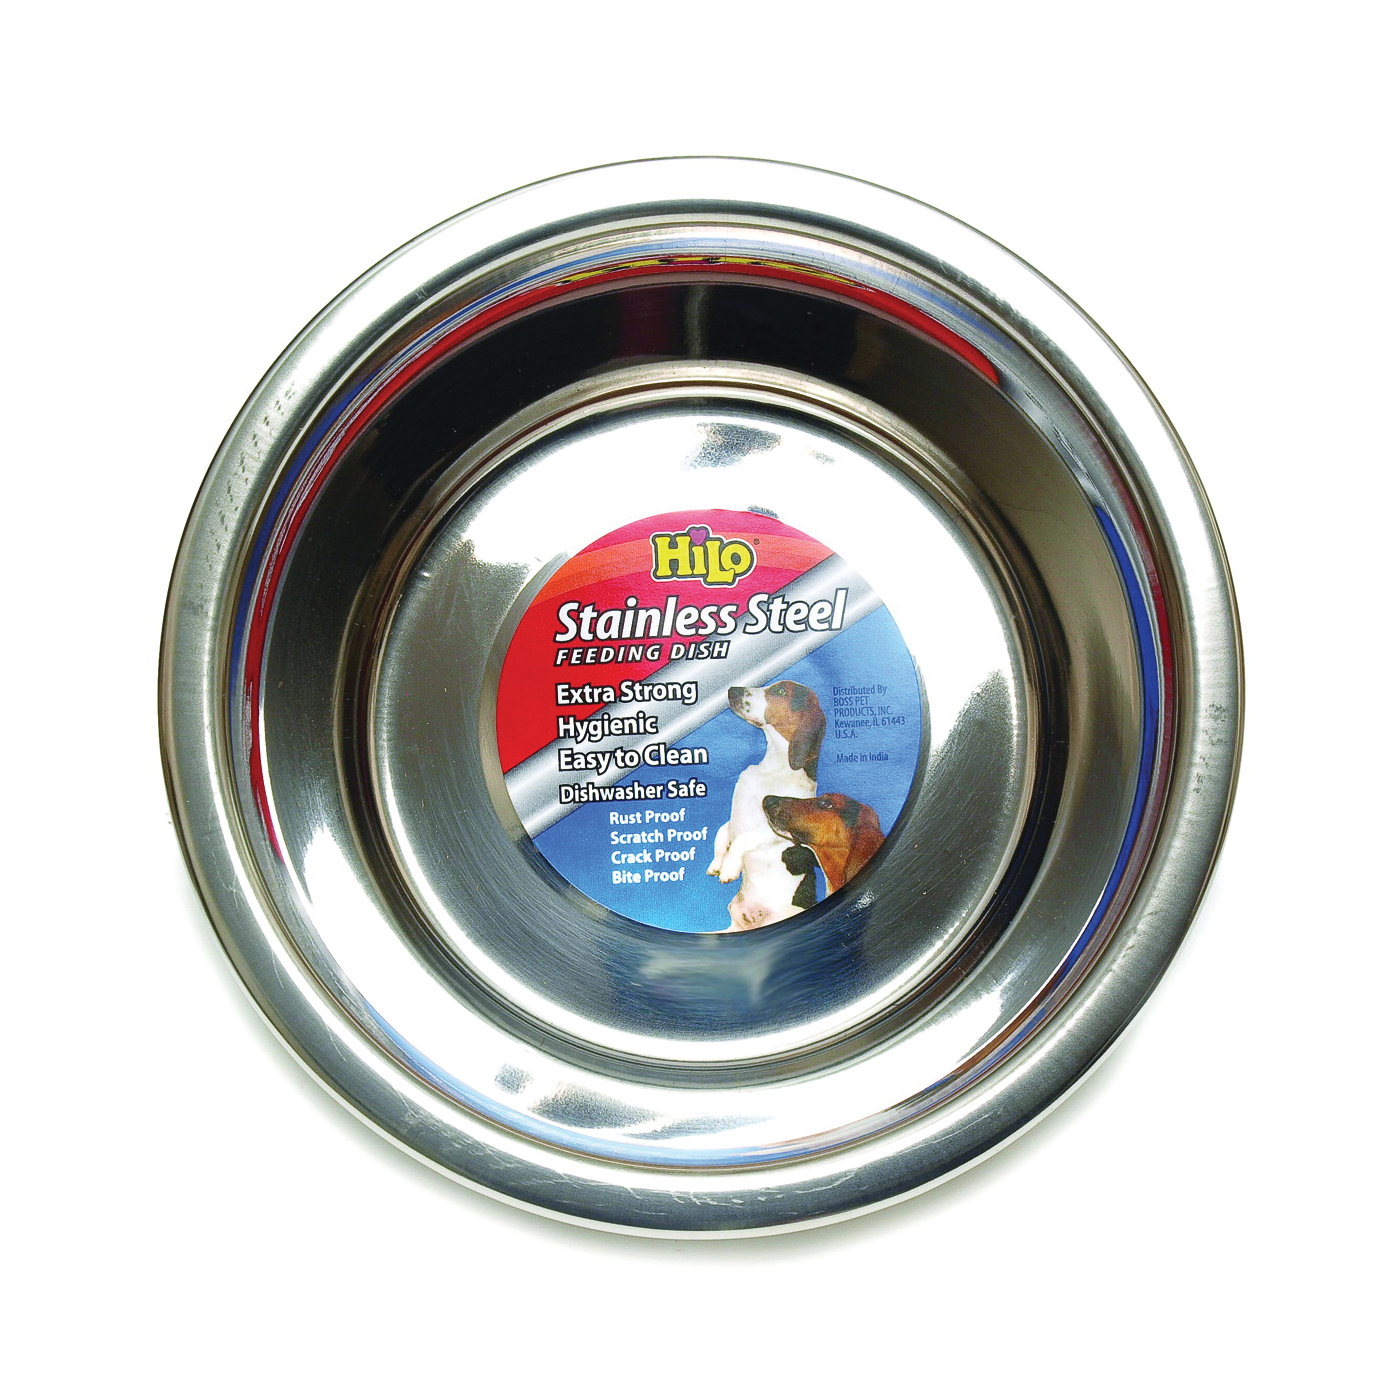 ZW150 98/56630 Pet Feeding Dish, L, 3 qt Volume, Stainless Steel